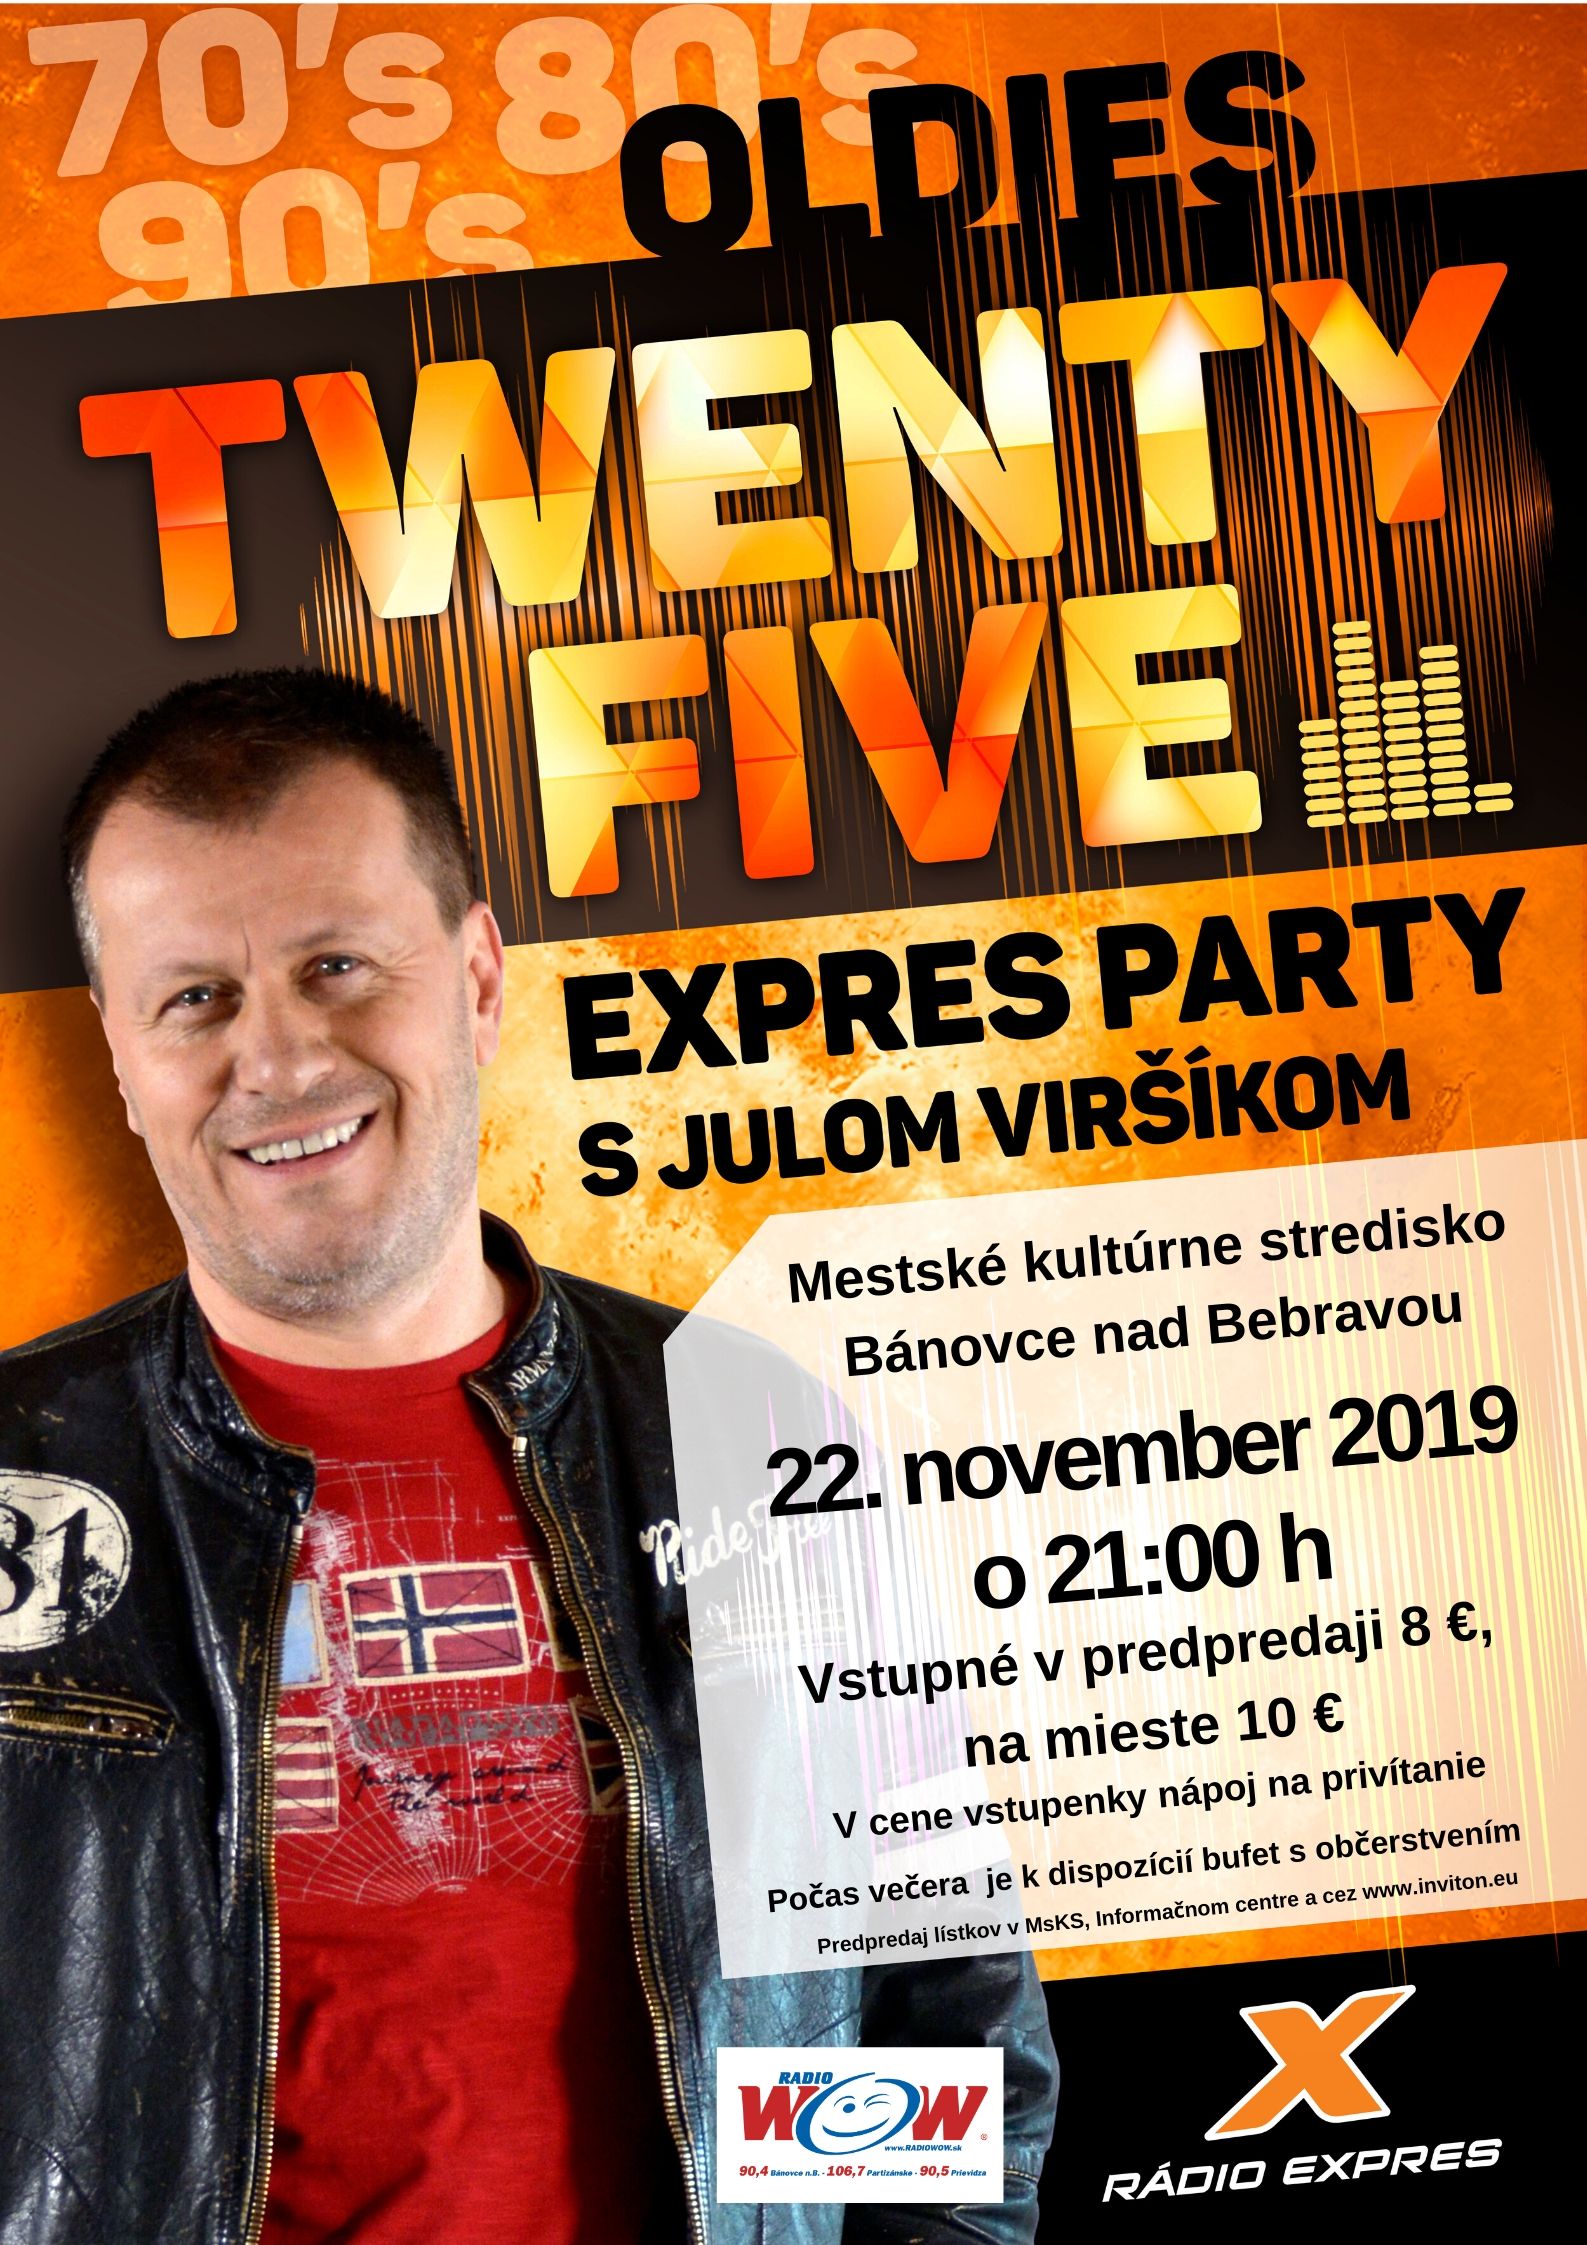 Twentyfive Expres Oldies Party 2019 Bnovce nad Bebravou